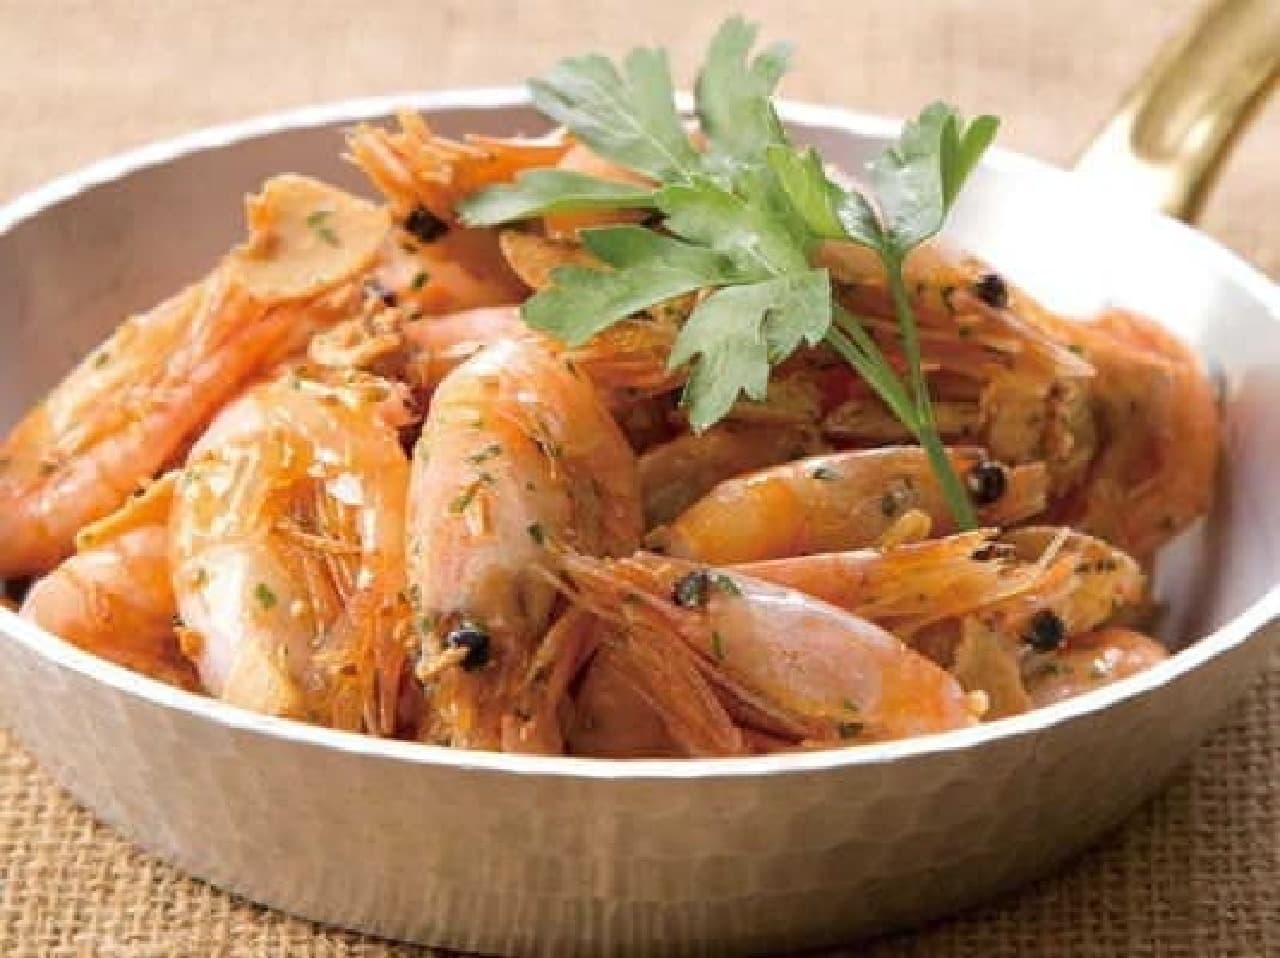 Hawaiian, North American, and Caribbean dishes are available! (The image is Hawaiian food "garlic shrimp")